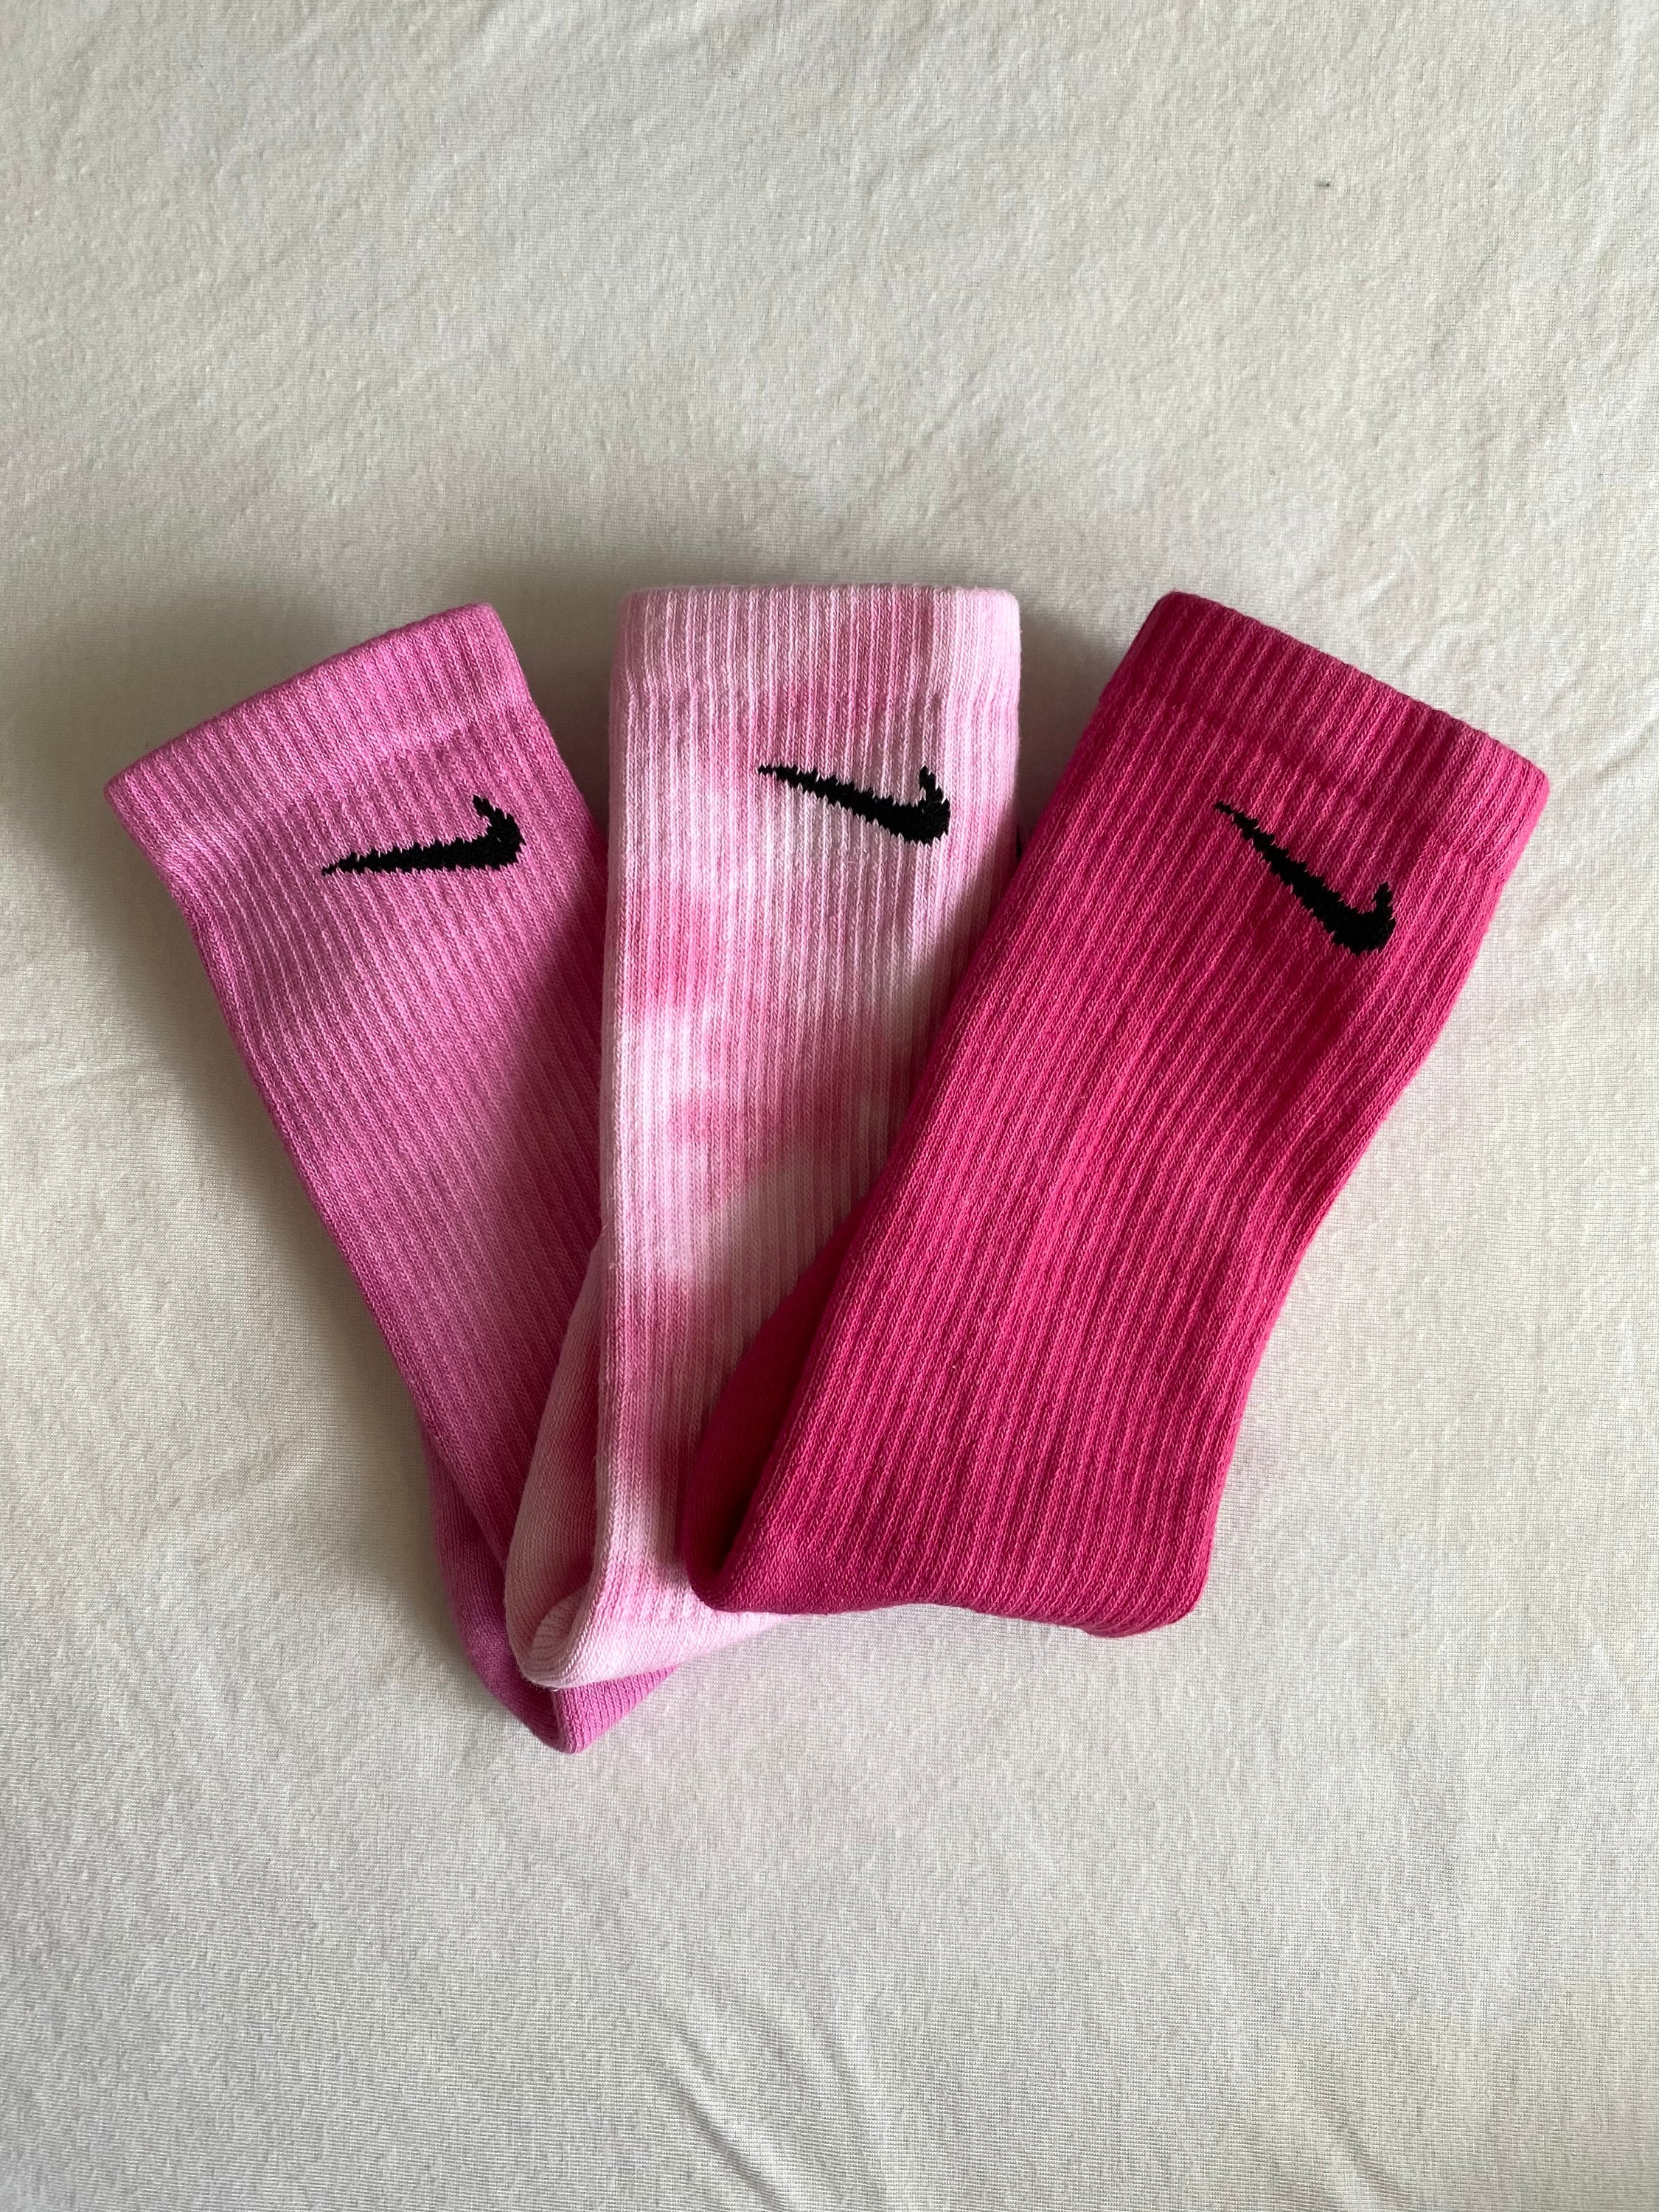 Prestatie Circulaire Ruïneren Dyed Nike Socks Individual Pair or 3 Pack Youth M & Adult - Etsy